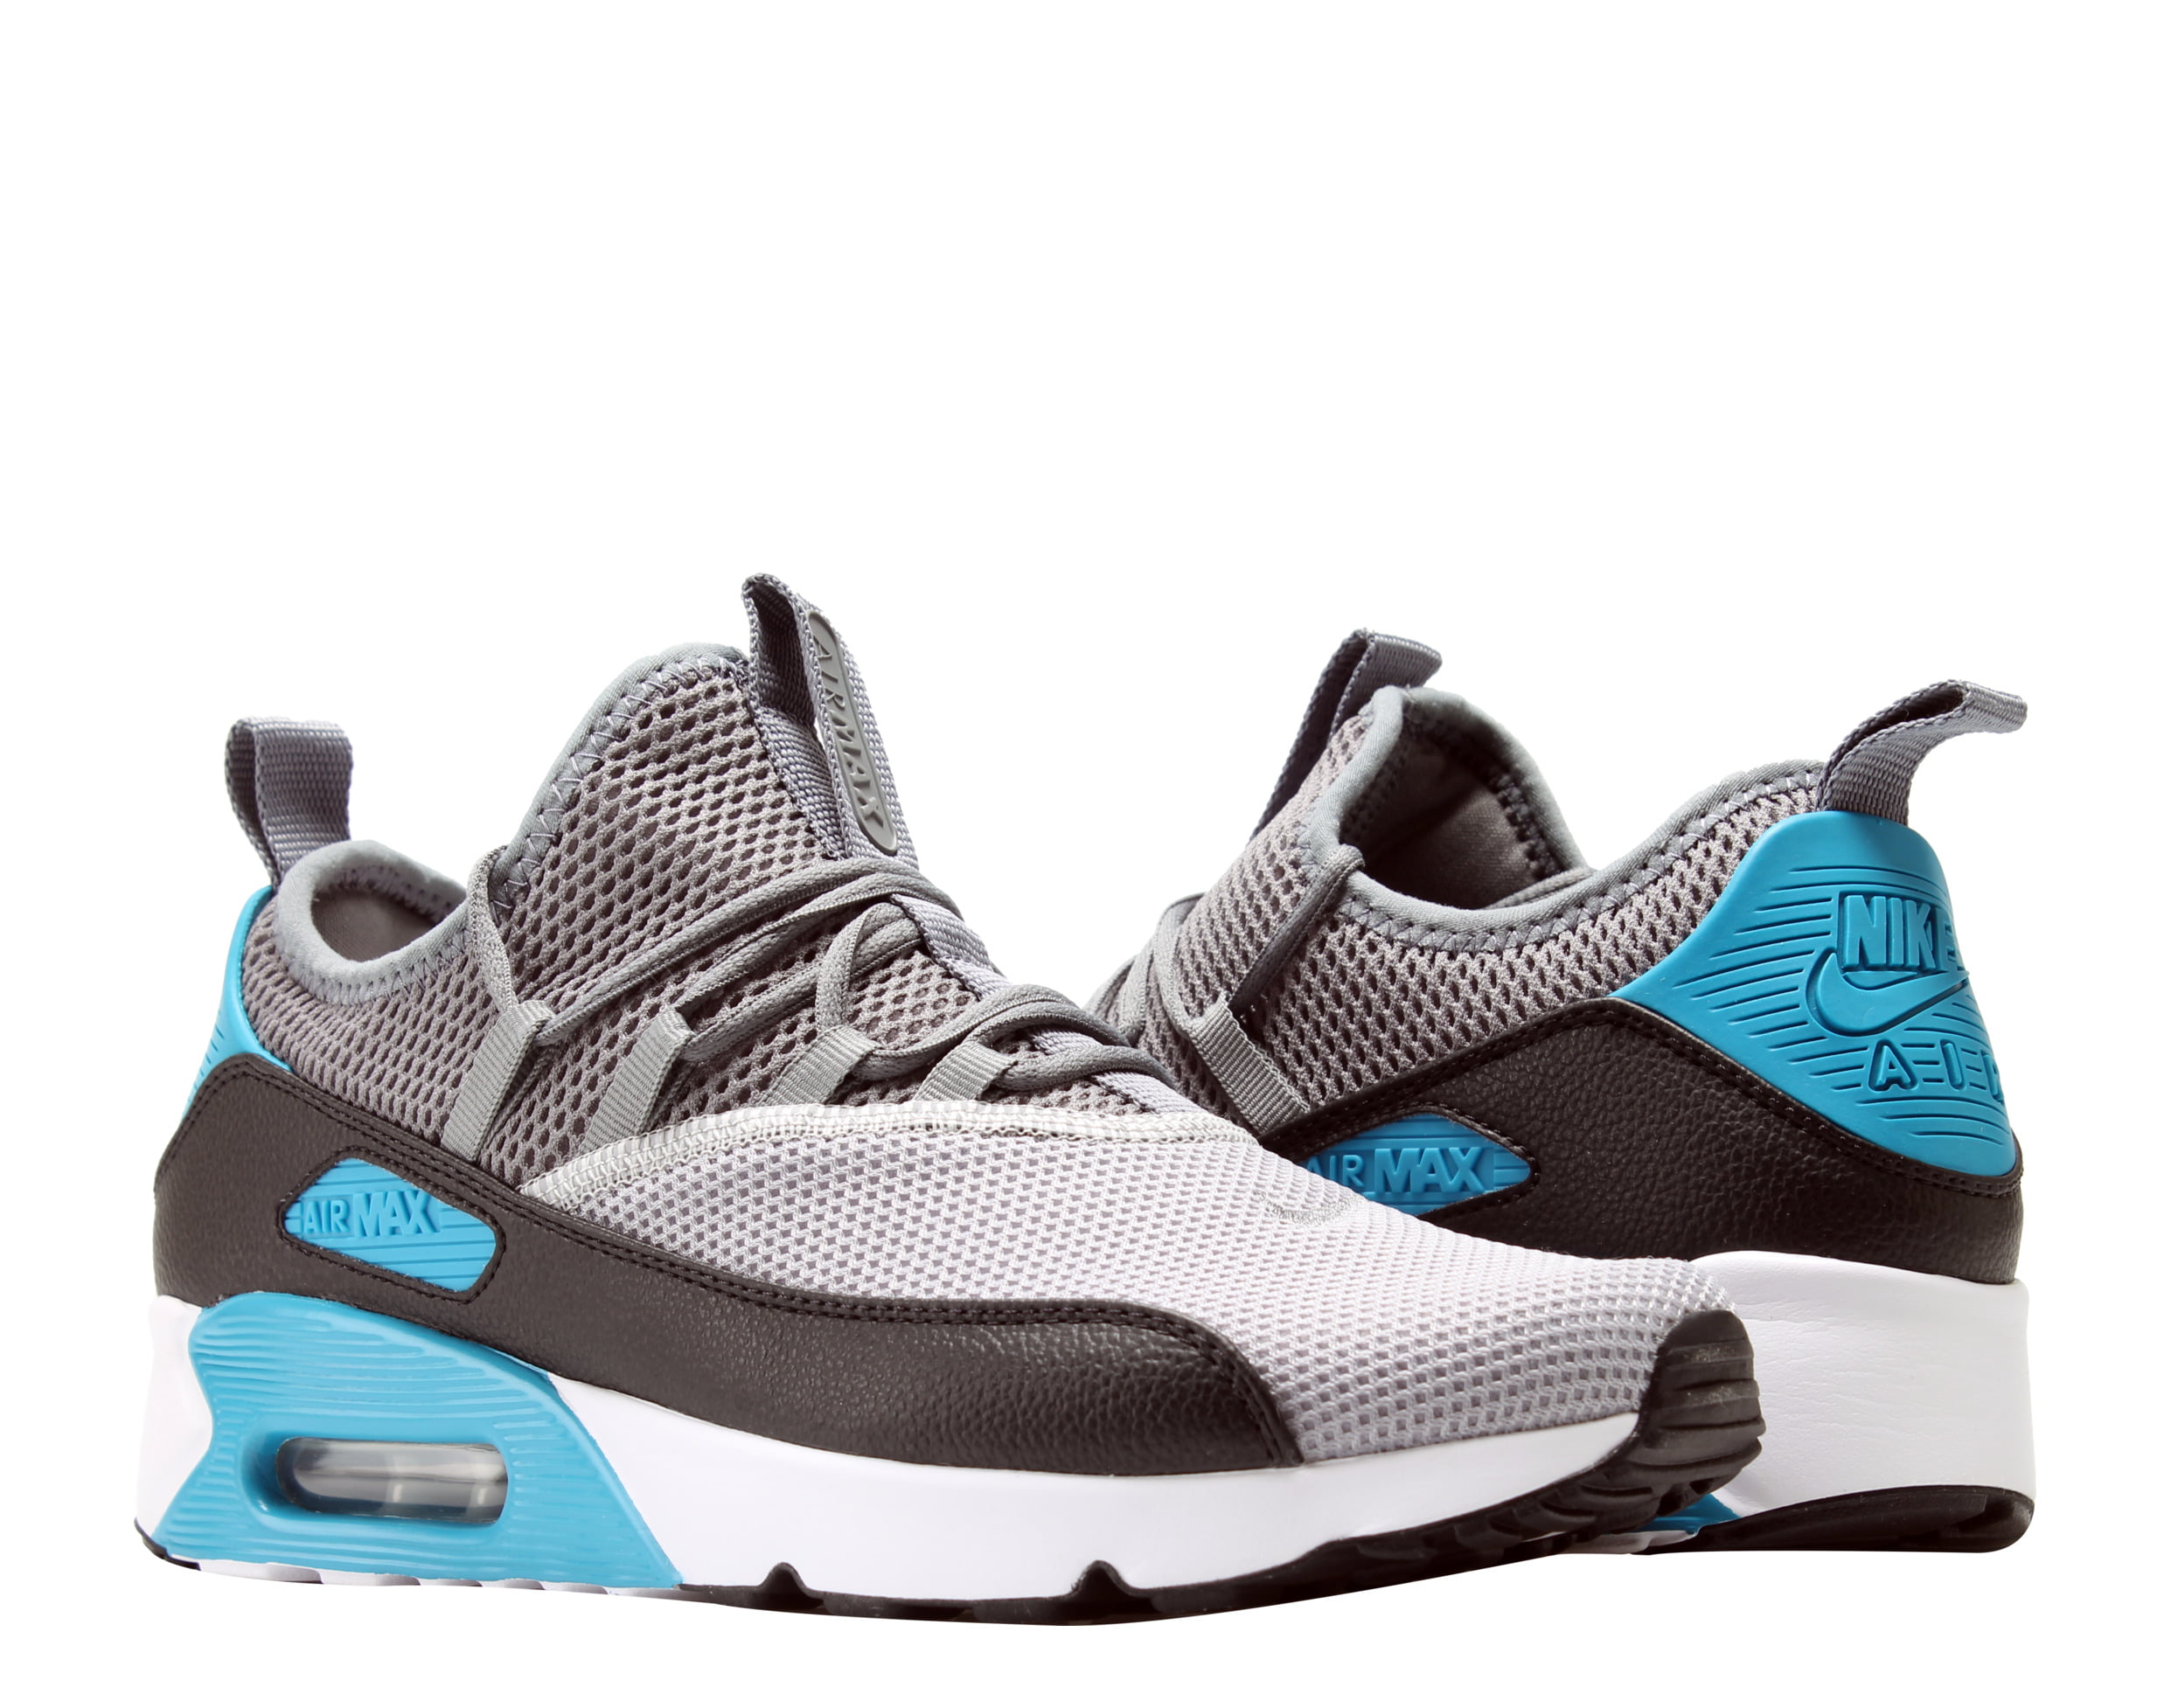 Nike Air Max 90 EZ Grey/Black-Laser Blue Men's Running Shoes AO1745-004